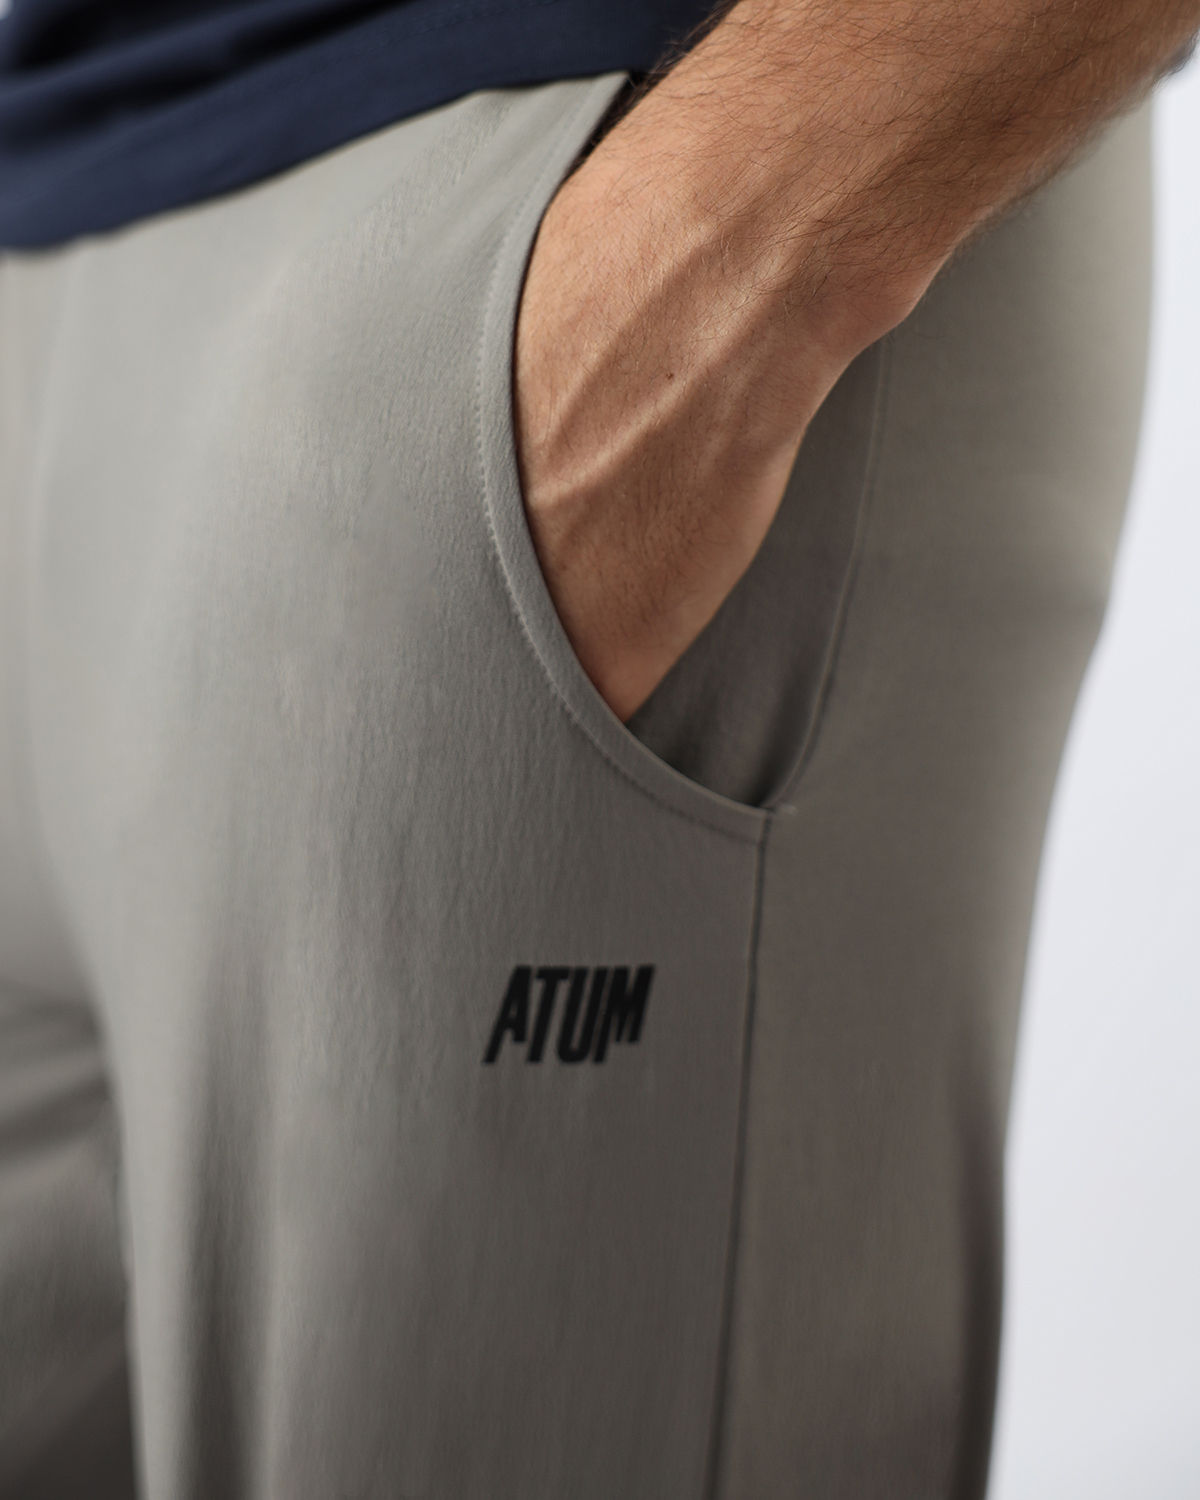 Atum Men's Slim-Fit Jogger Pants - Atum Egypt